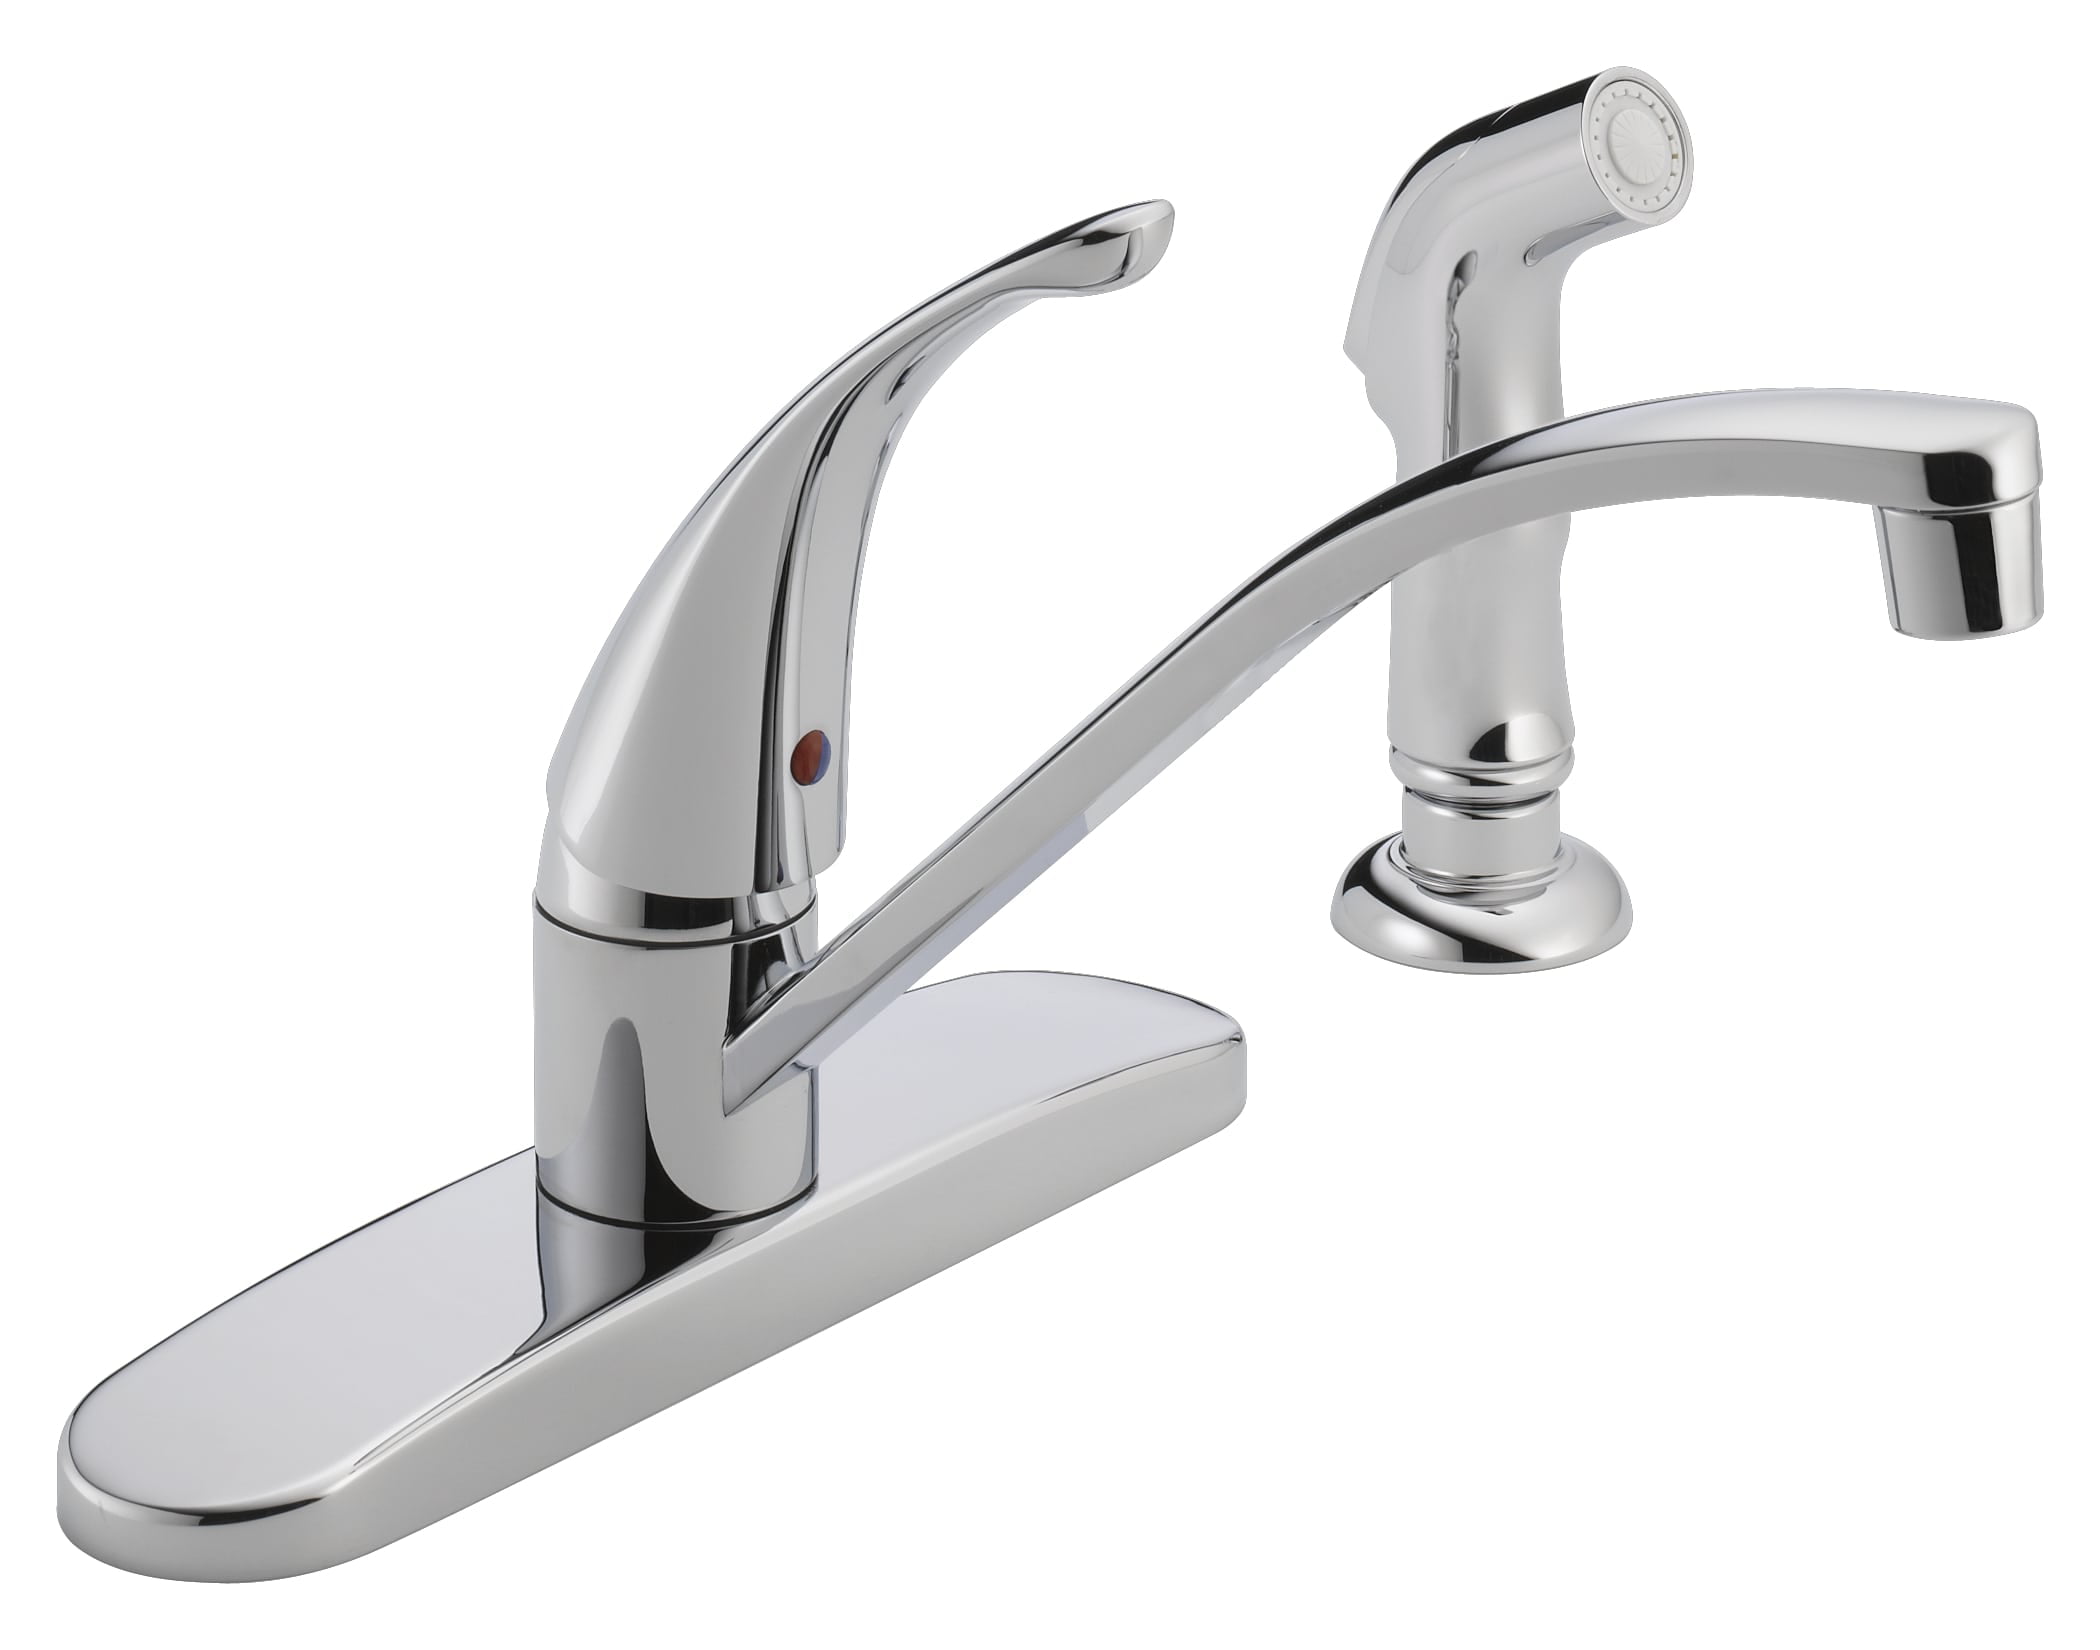 peerless single handle kitchen sink faucet ebay